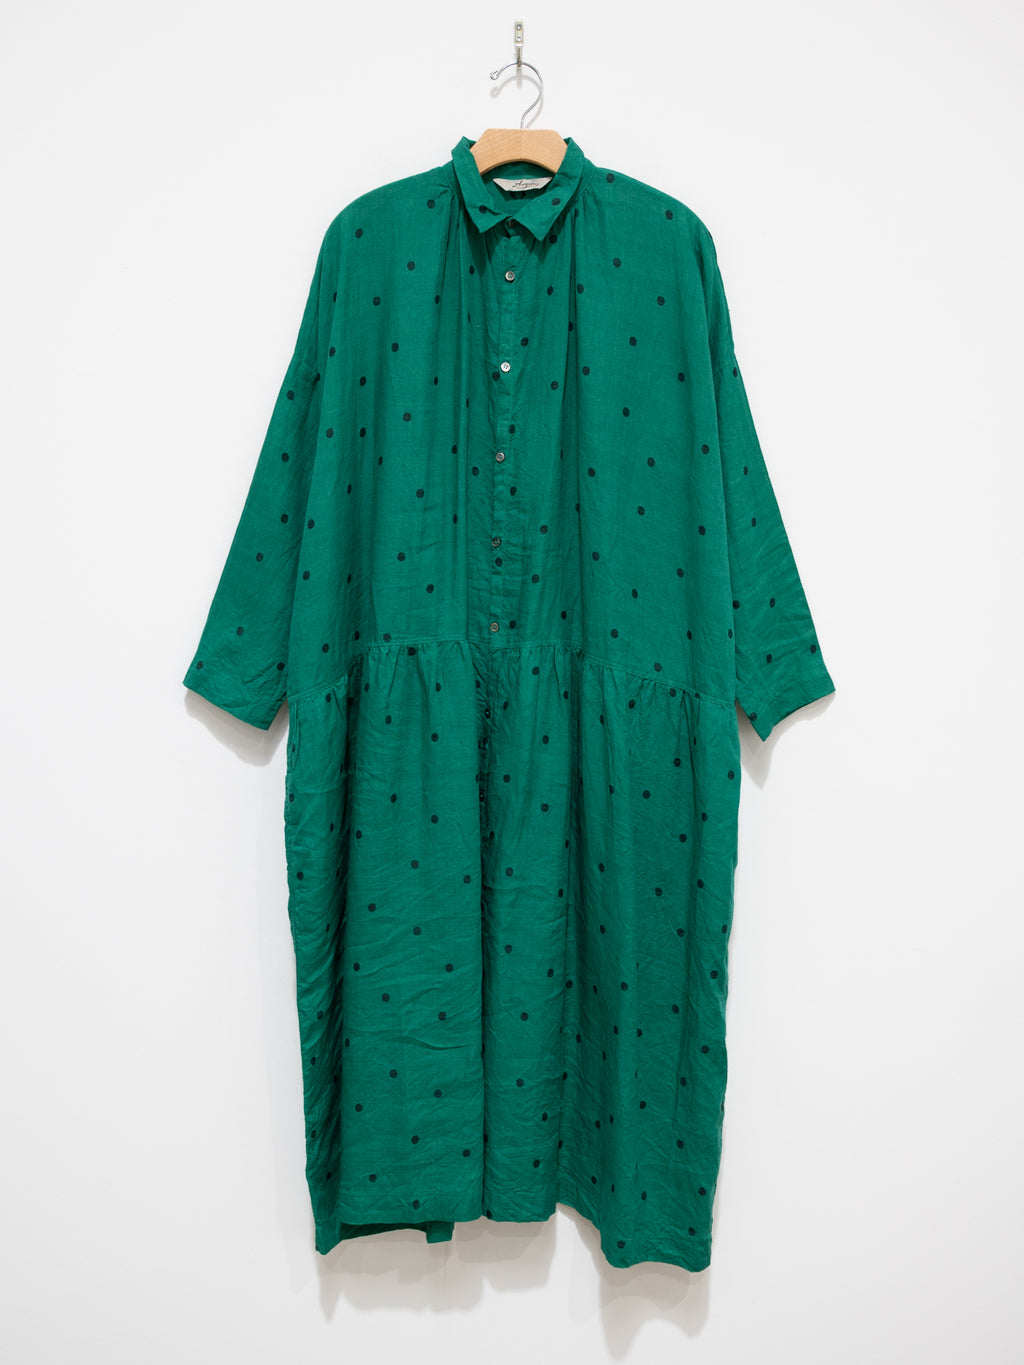 Namu Shop - Ichi Antiquites Linen Dot Shirt Dress - Green x Black